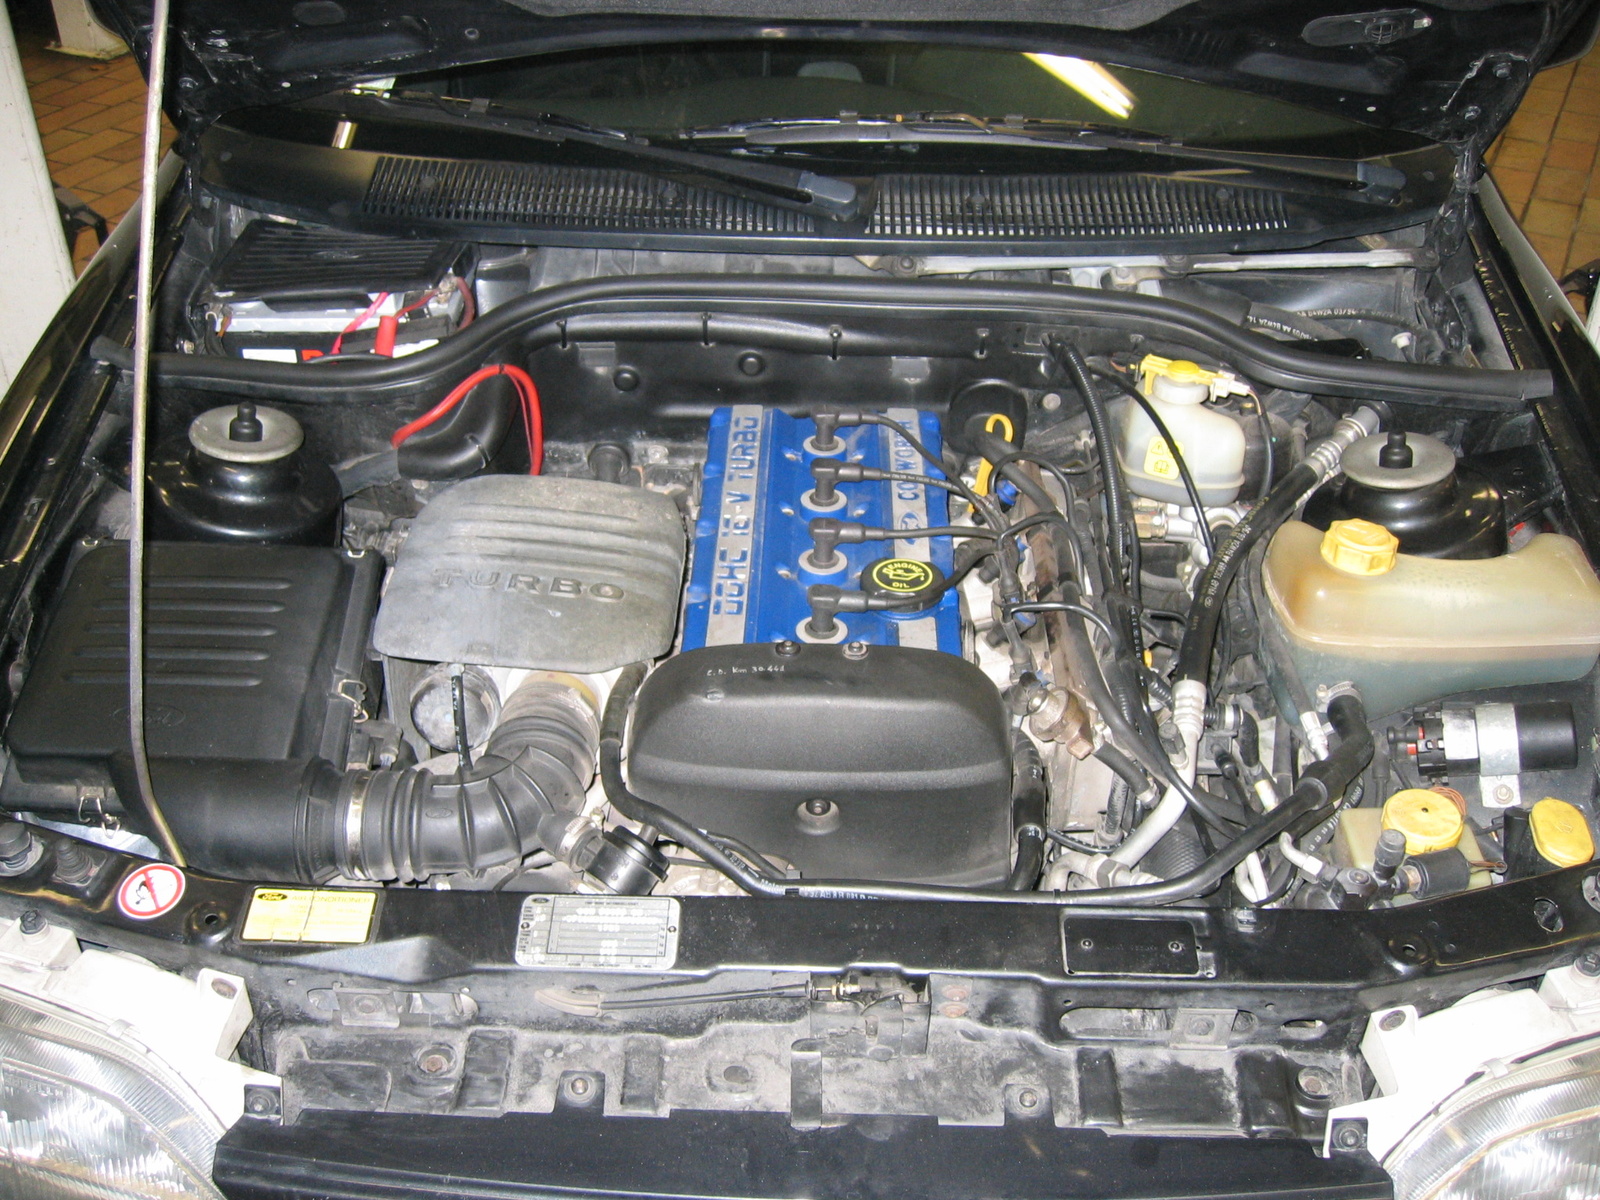 1994 Ford escort engine specs #7